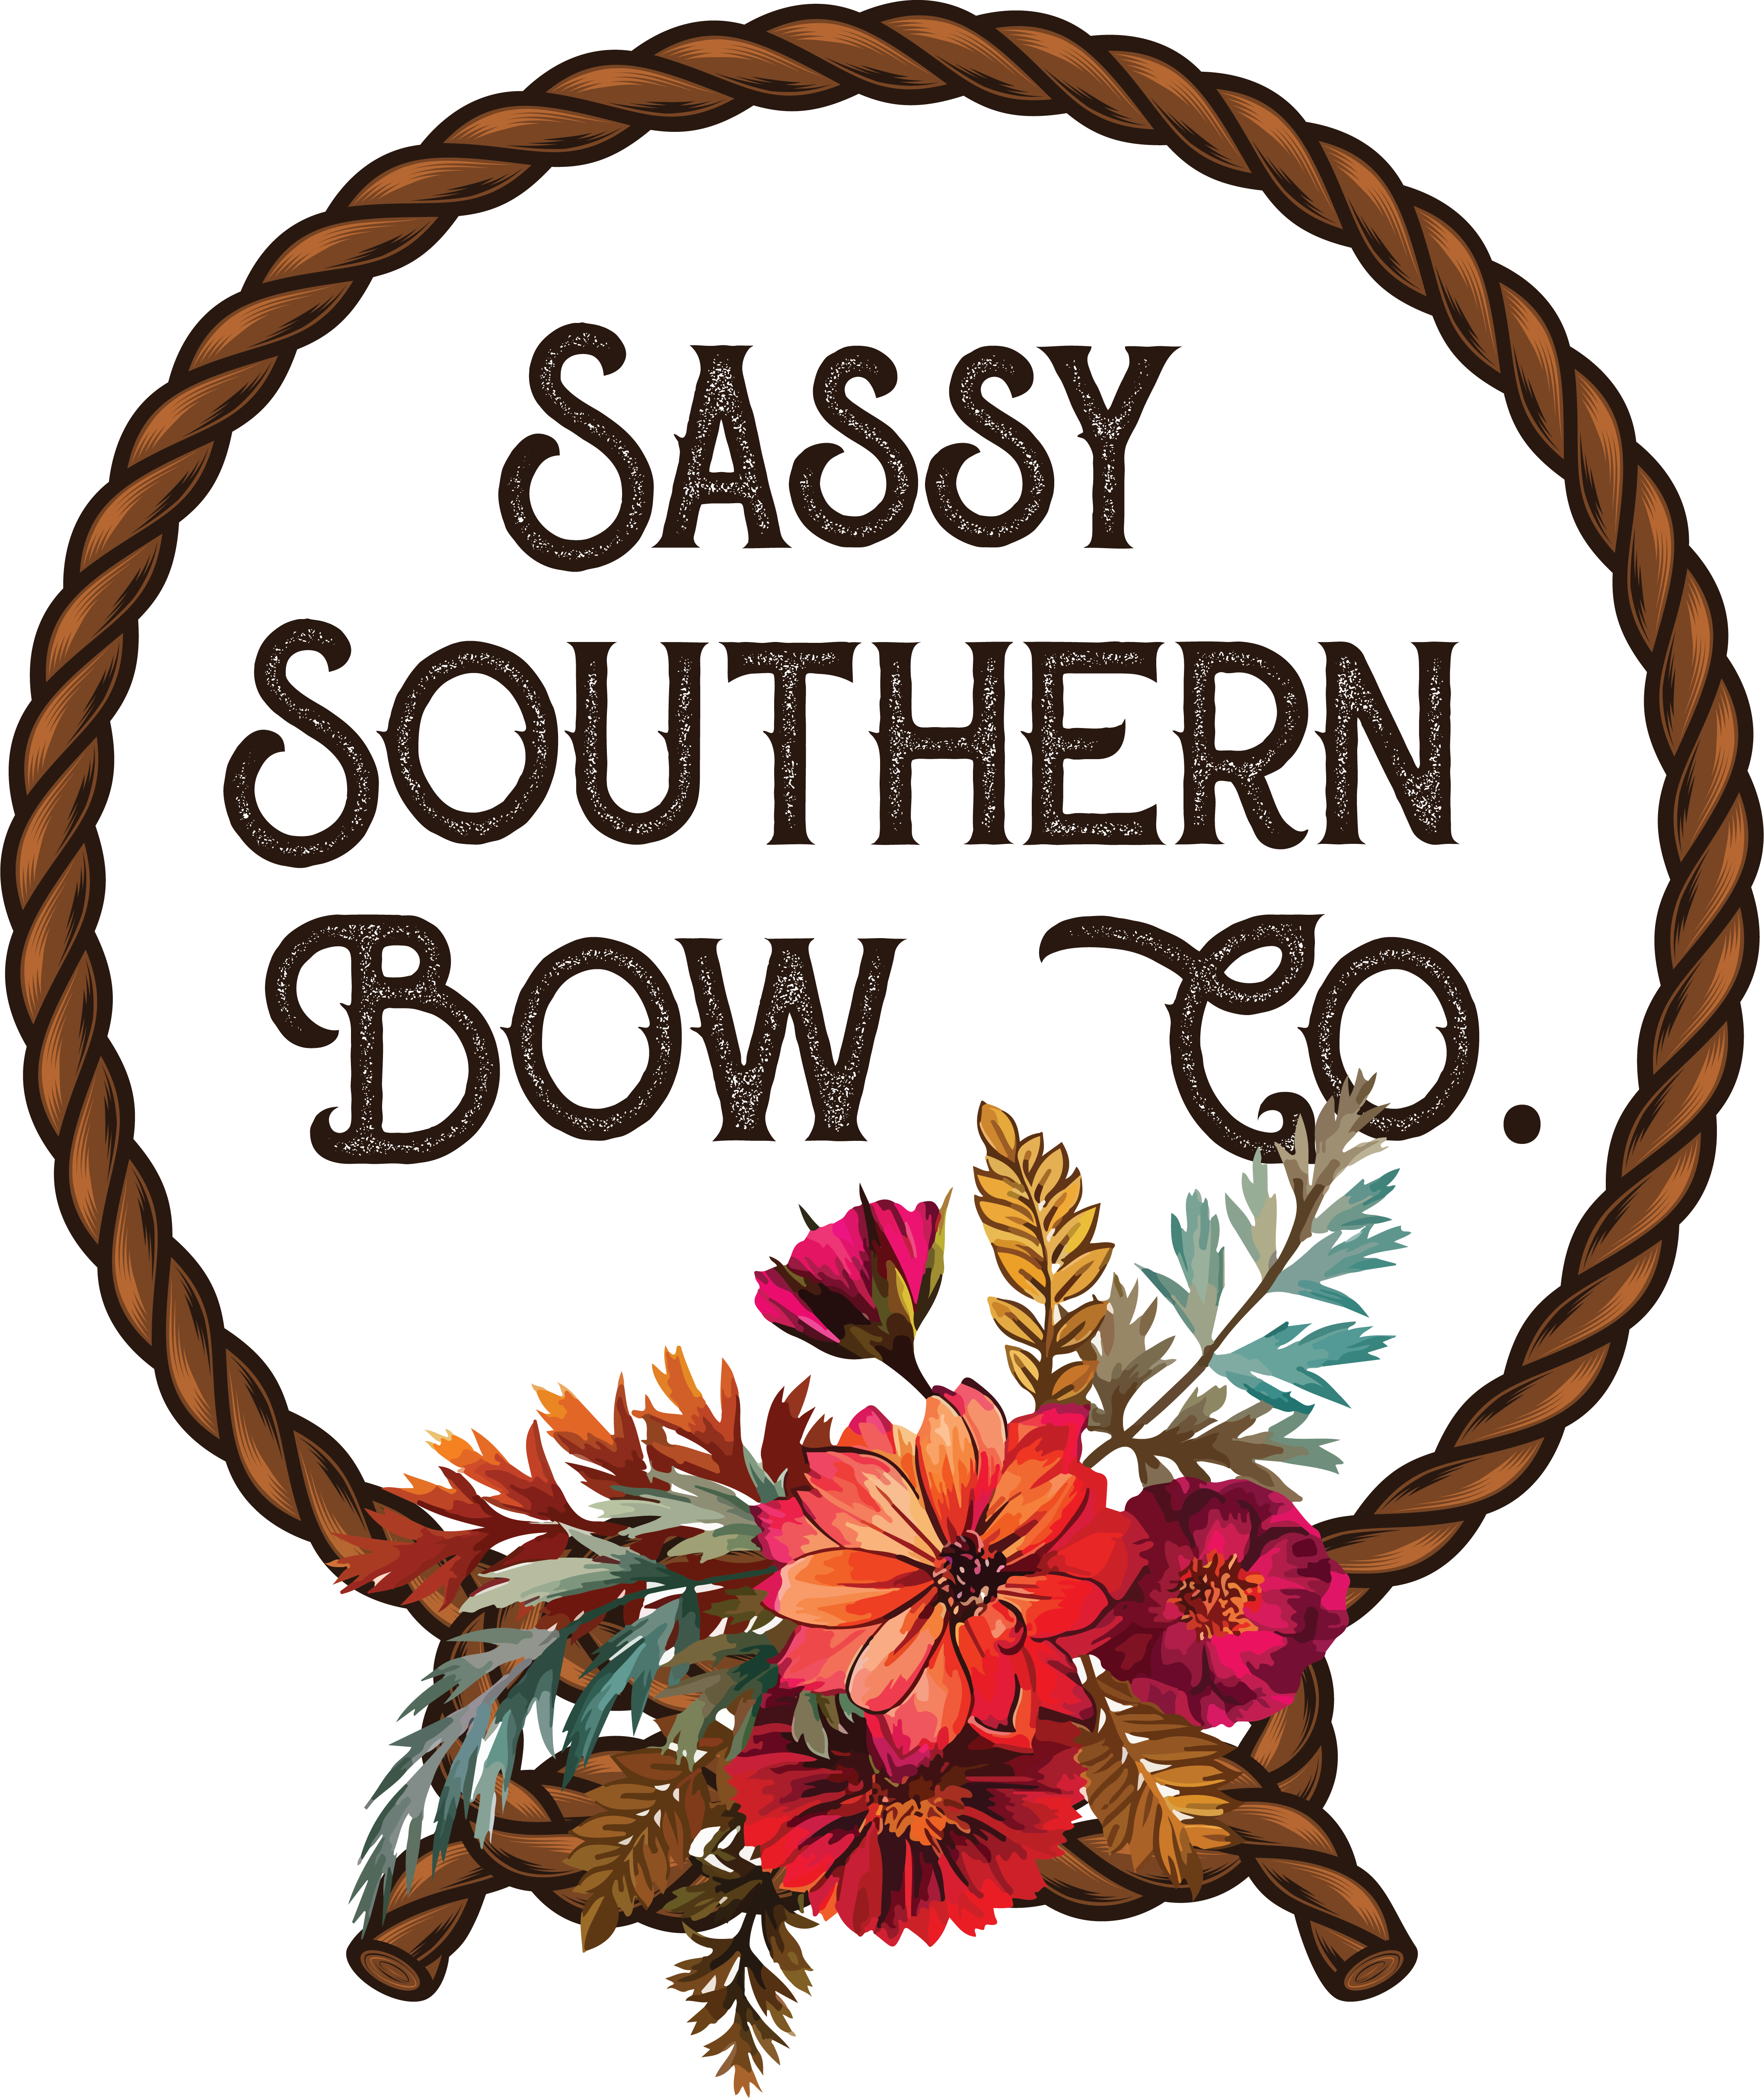 Sassy Southern Bow Co., Small Business Logo Design, Logo Design